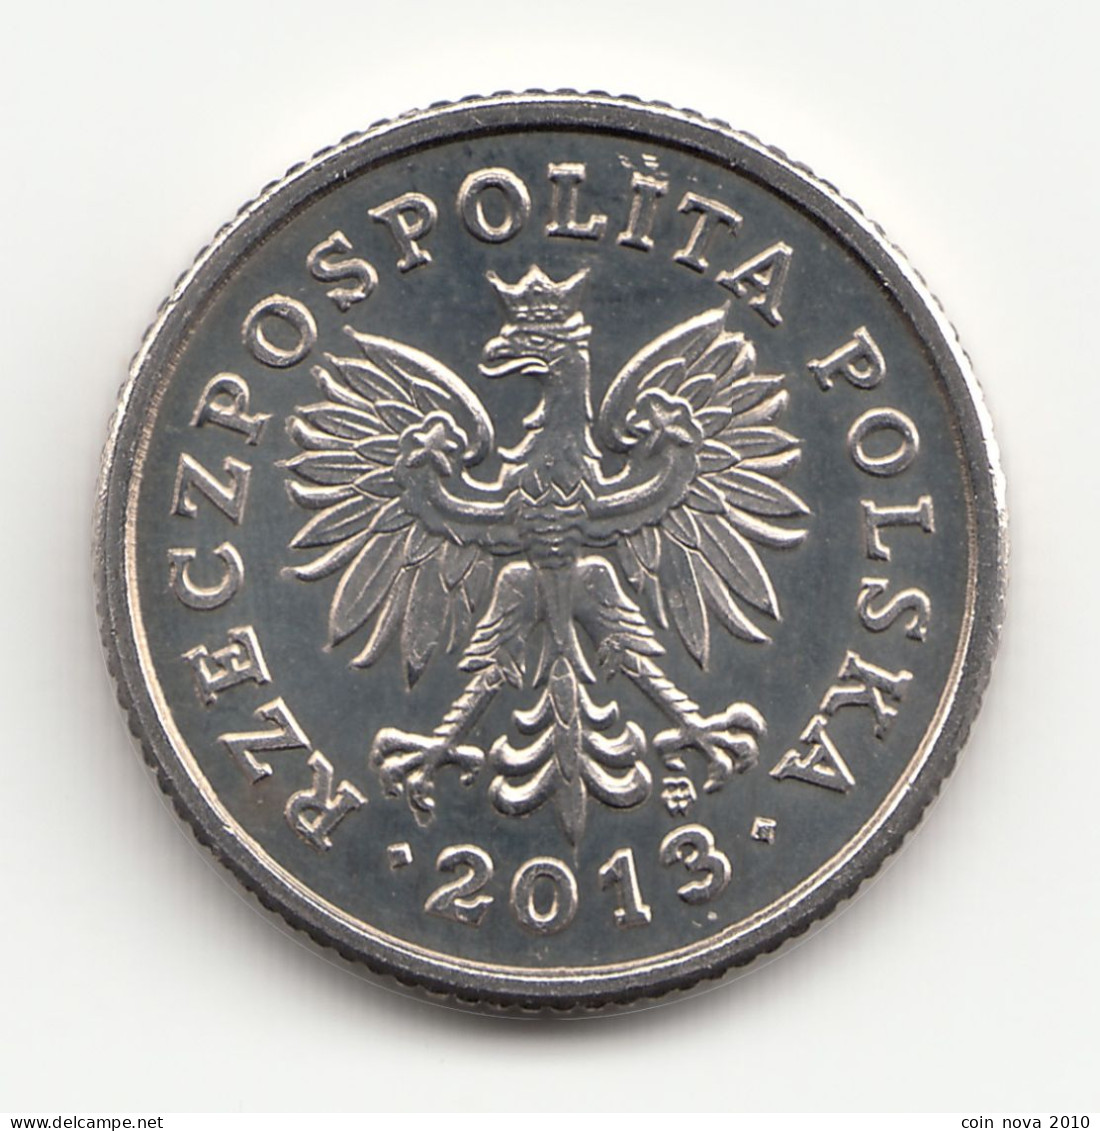 Poland Polen 3 X Coins 10 20 and 50 Groszy 2013